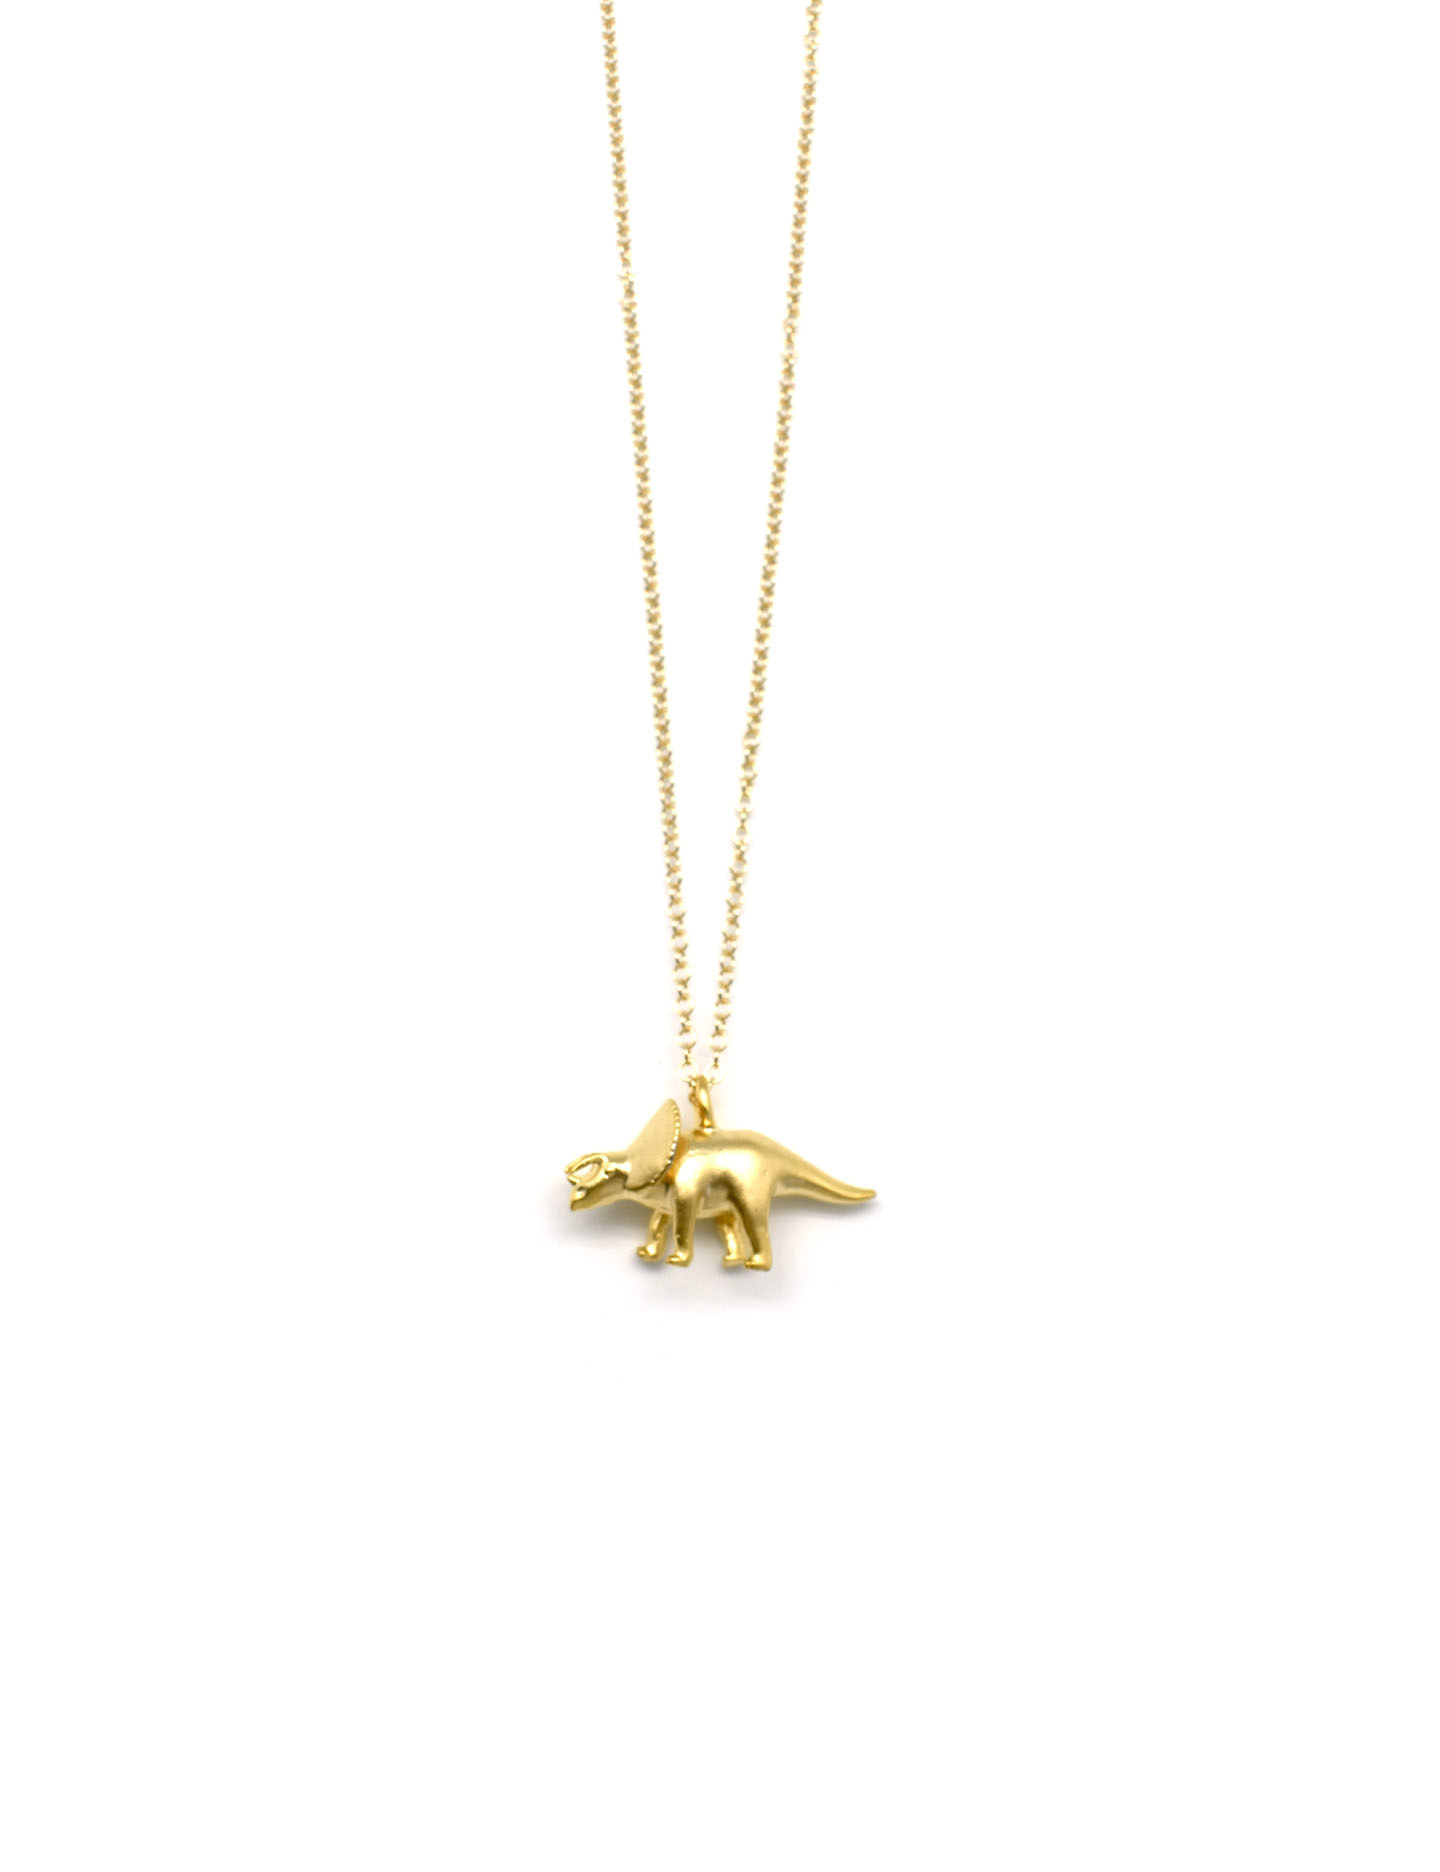 Pterodactyl Dinosaur Charm Necklace - Gold Finished Dinosaur Jewelry o –  Mark Poulin Jewelry